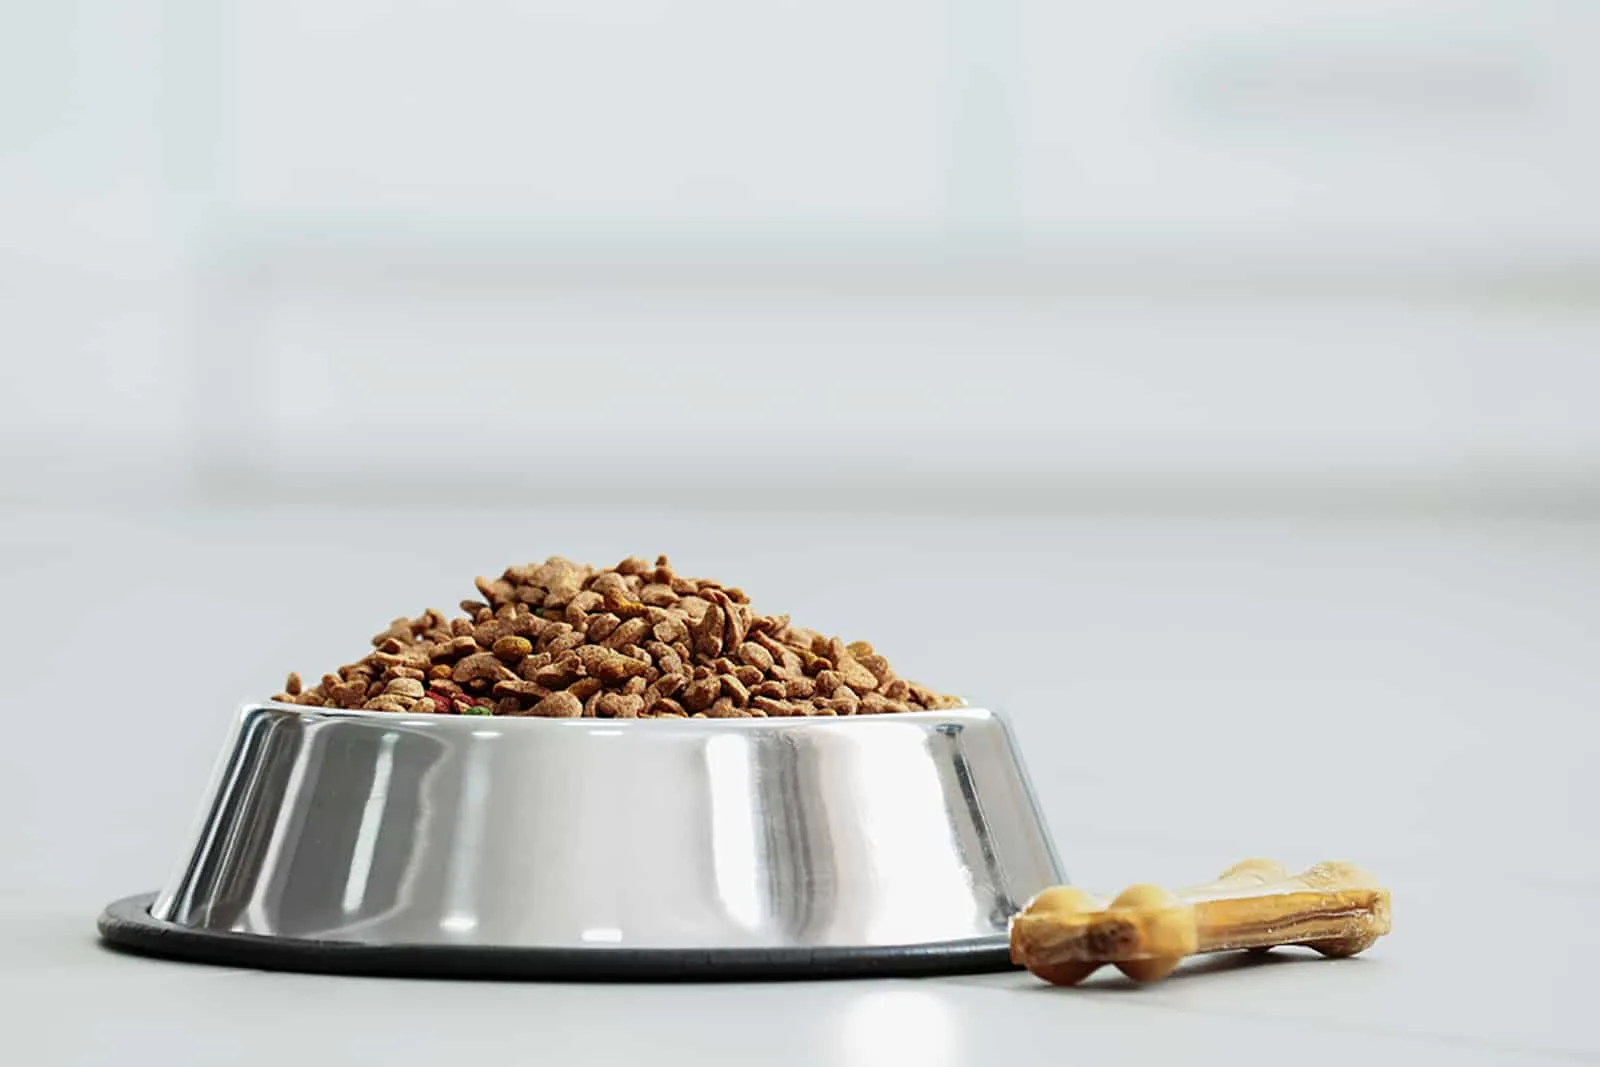 dry dog food in a metal bowl